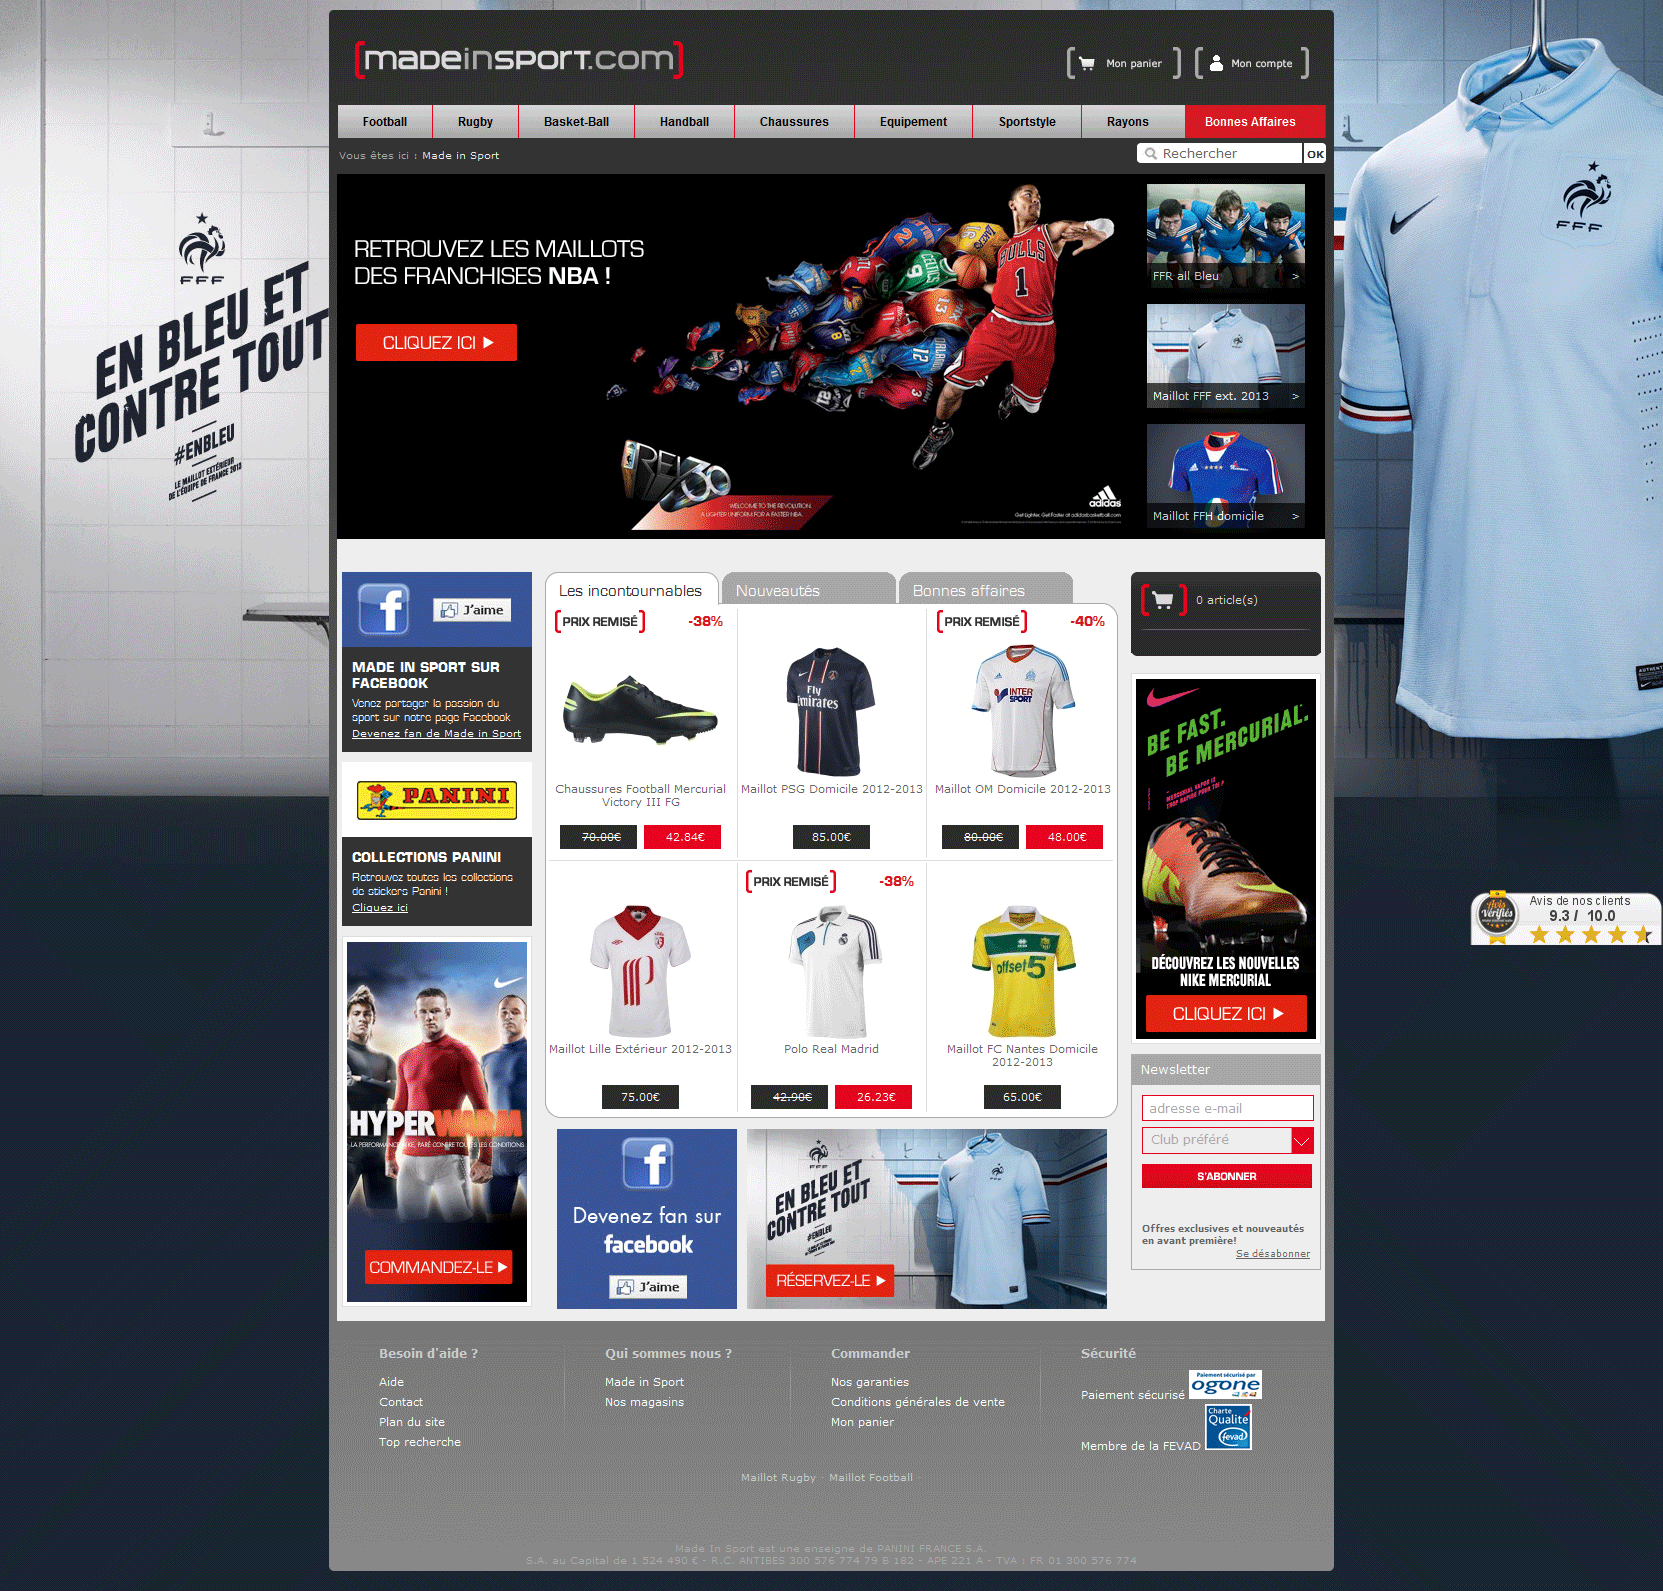 Made in sport - Agence Colibri, Design, Publicité, Web - Création du site e-commerce madeinsport.com